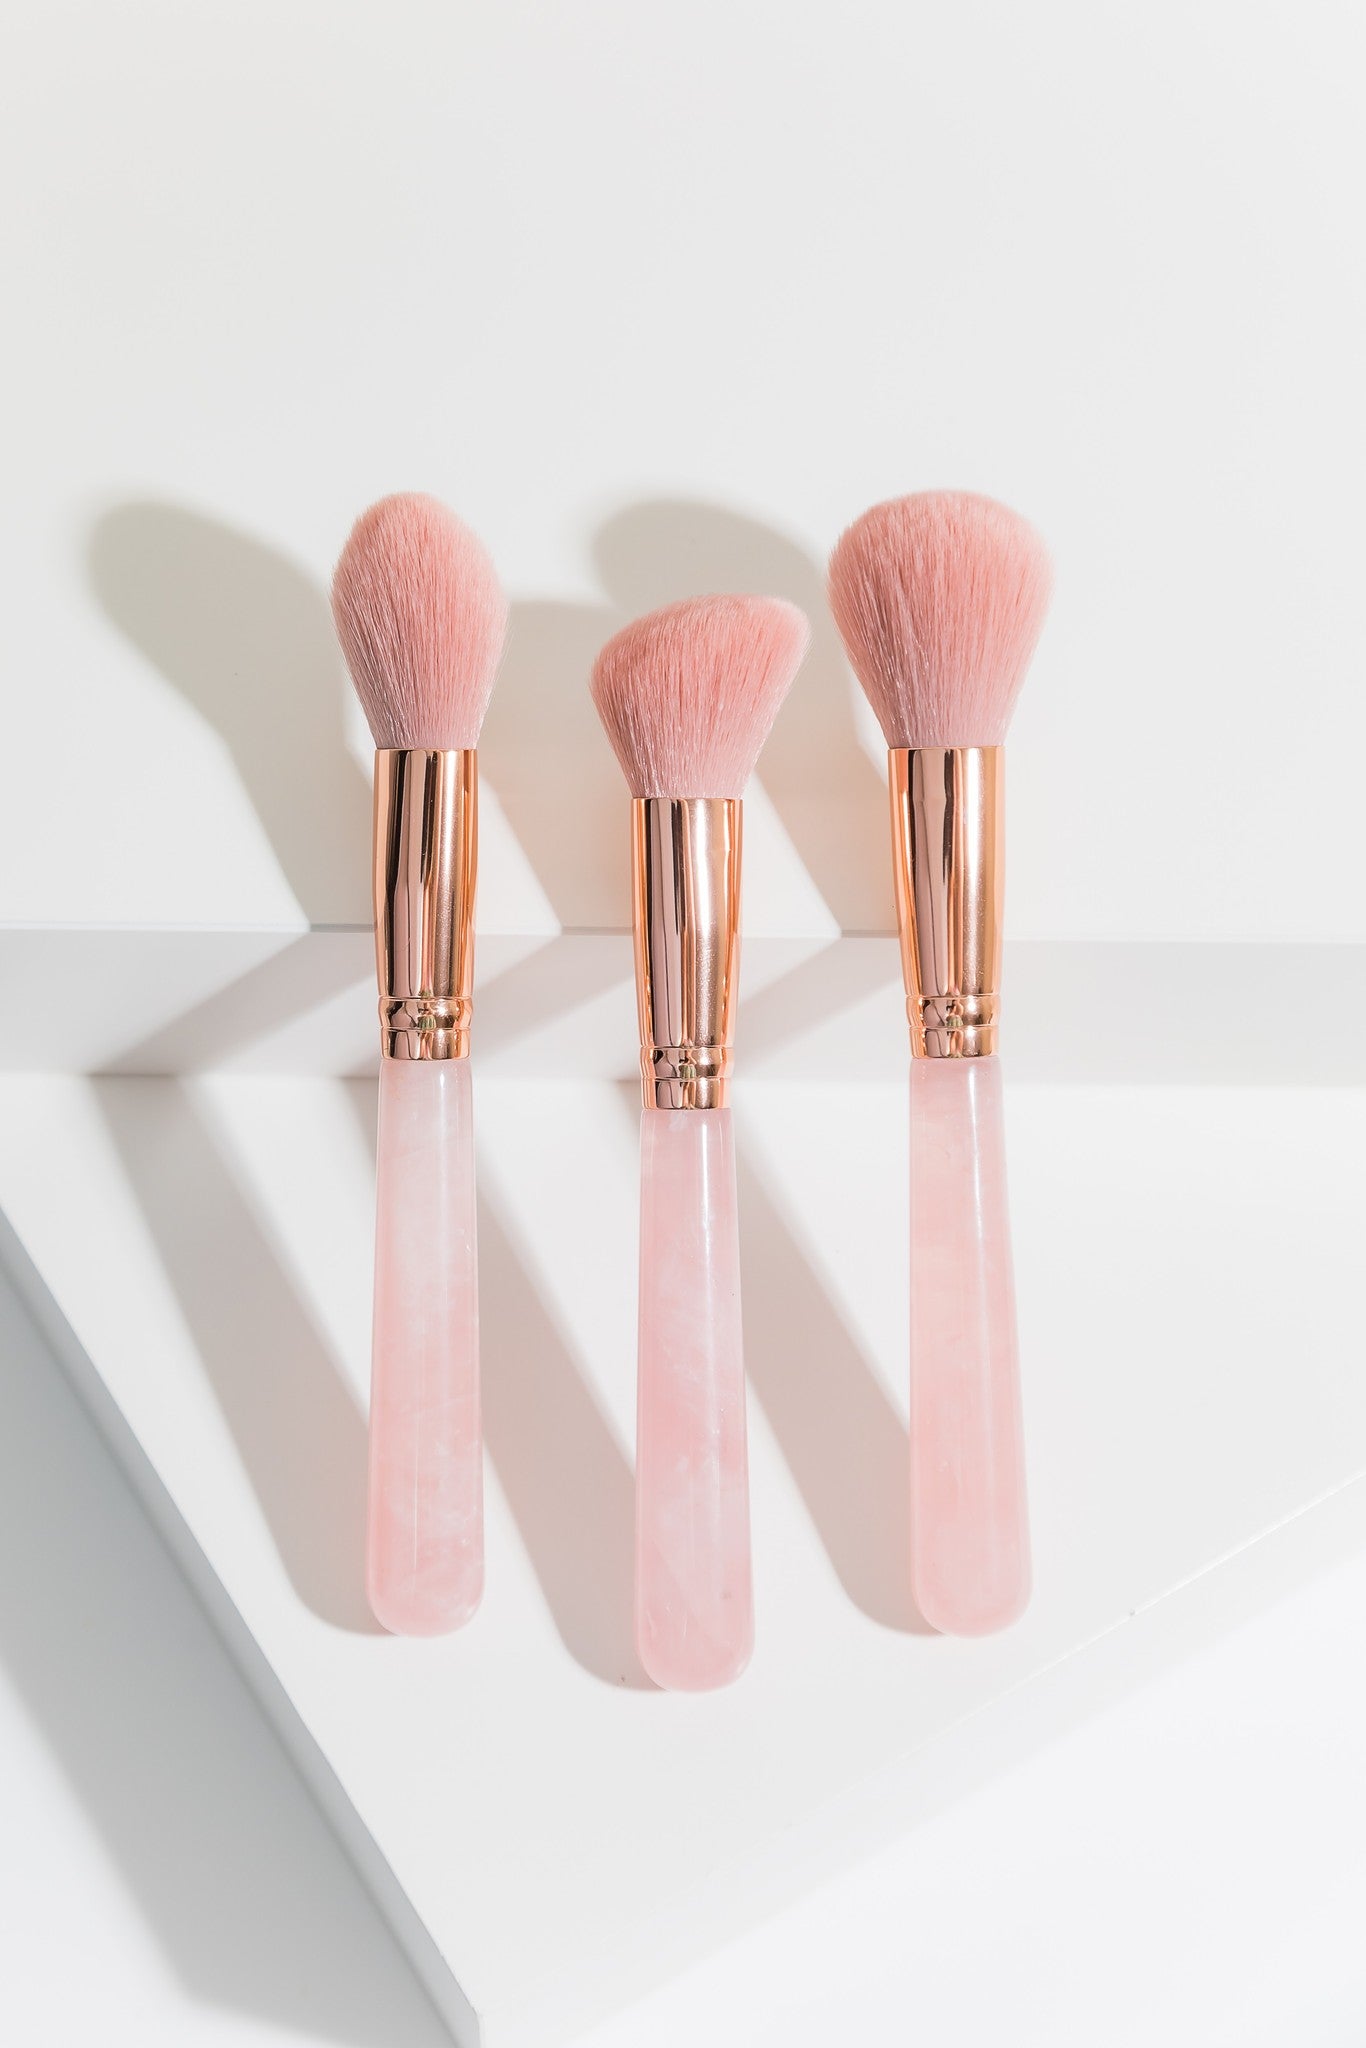 Rose Quartz soft makeup brush set, set of three, Australian brush